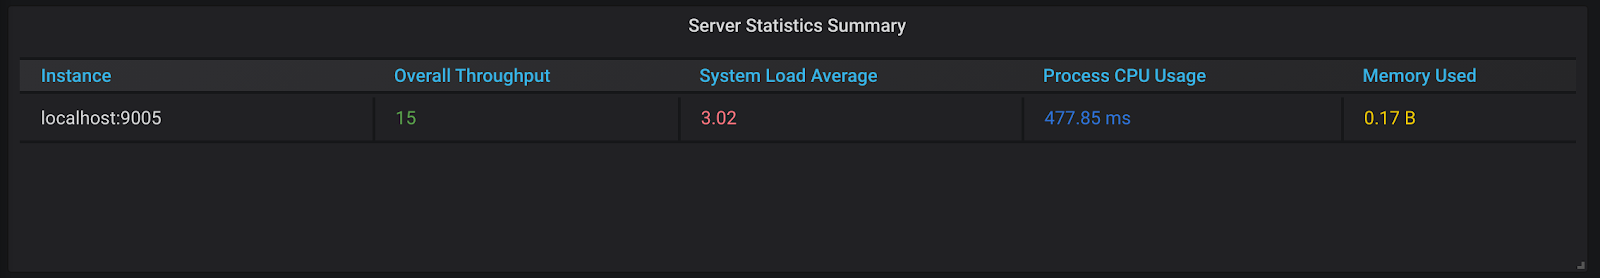 Server statistics summary